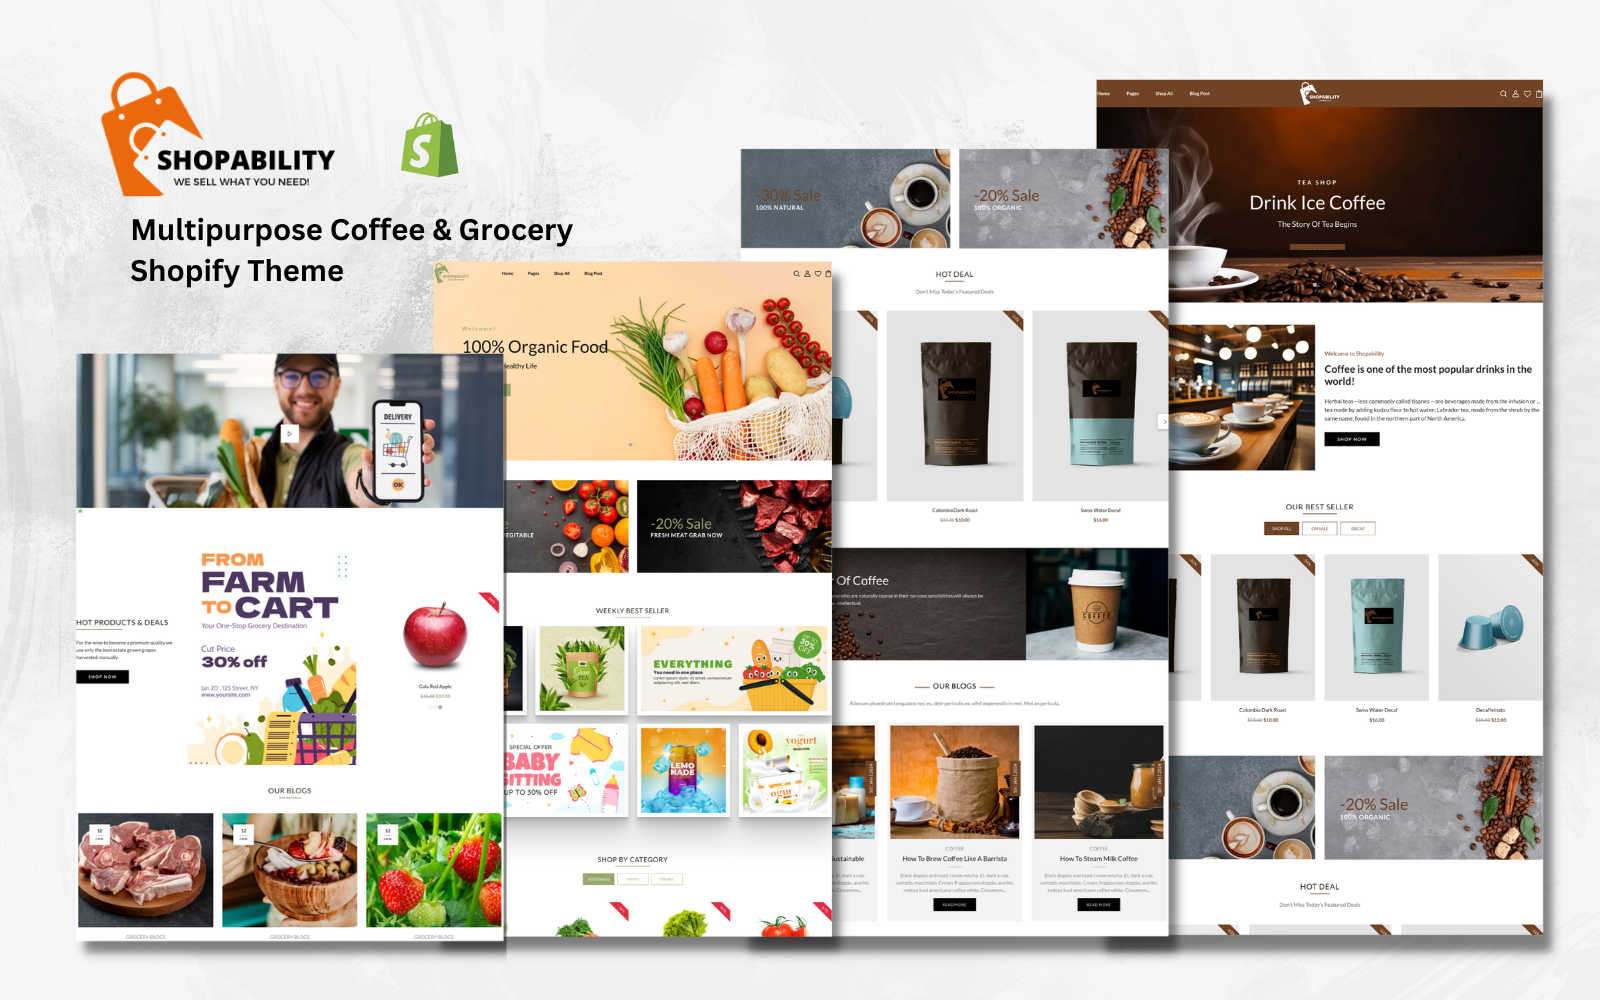 Shopability - Multipurpose Coffee & Grocery Shopify Theme